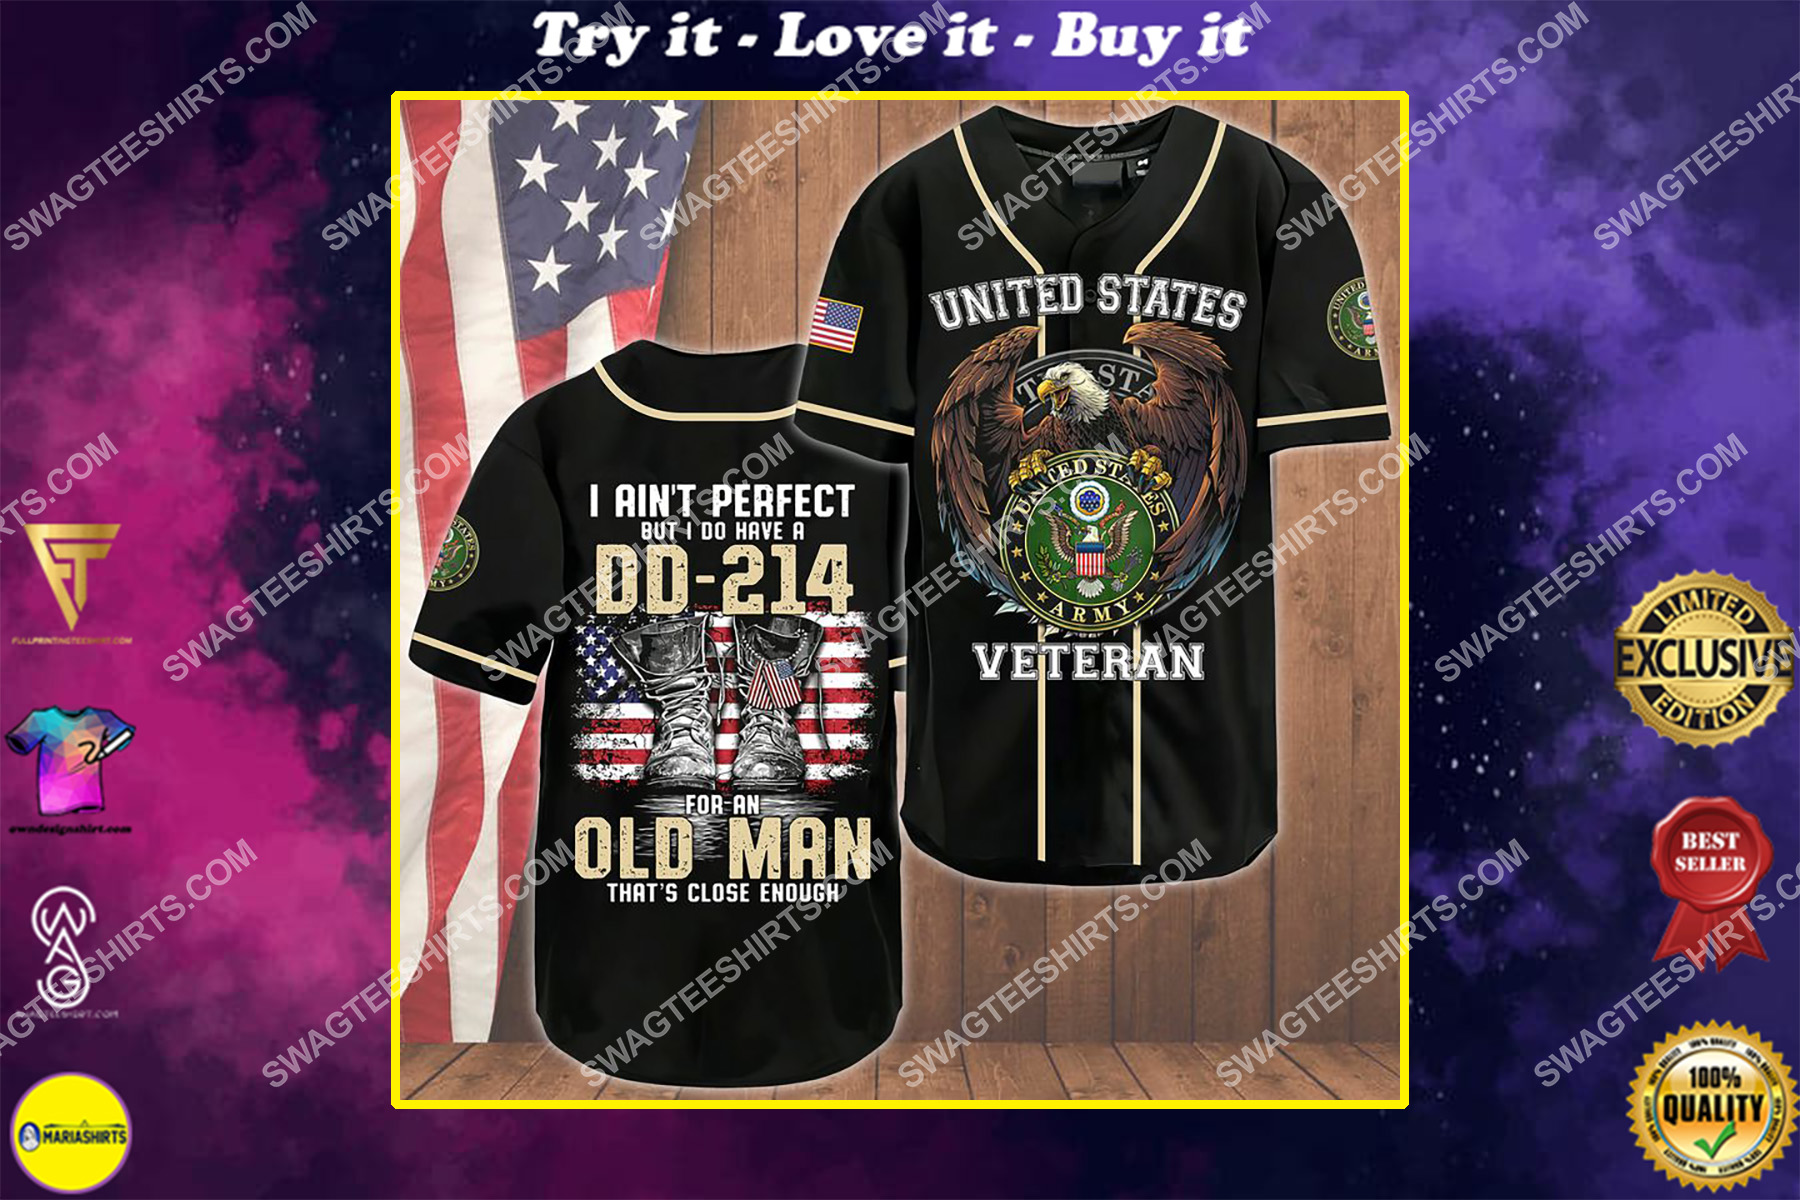 i ain't pperfect but i do have a dd-214 for an old man that's close enough army veteran baseball shirt